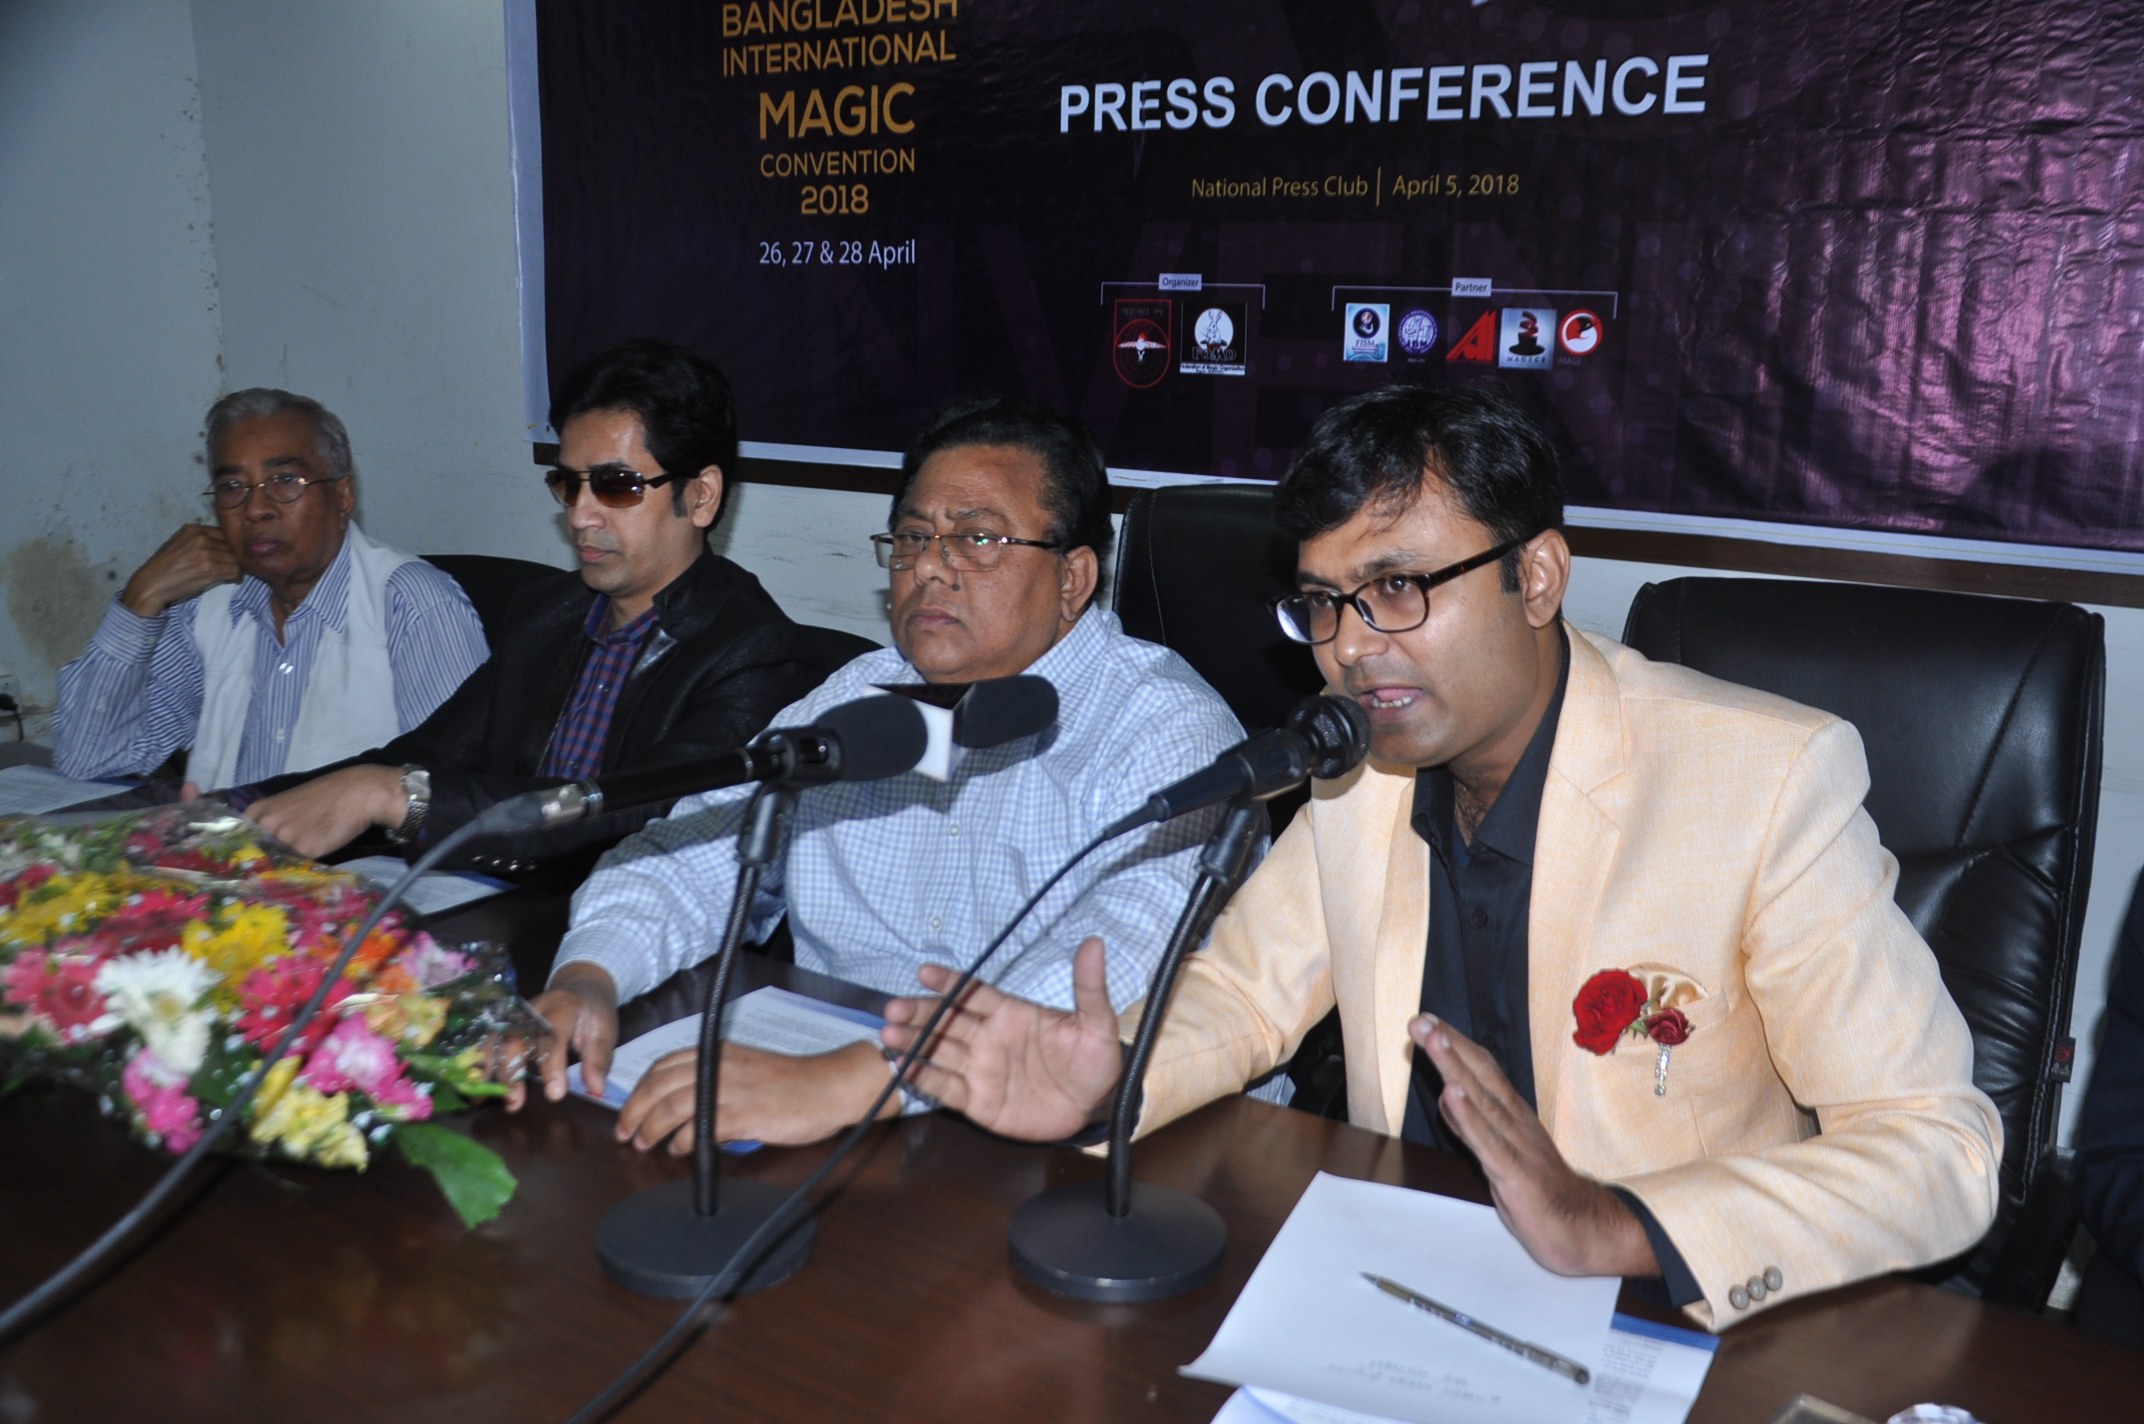 Bangladesh International Magic Convention 2018